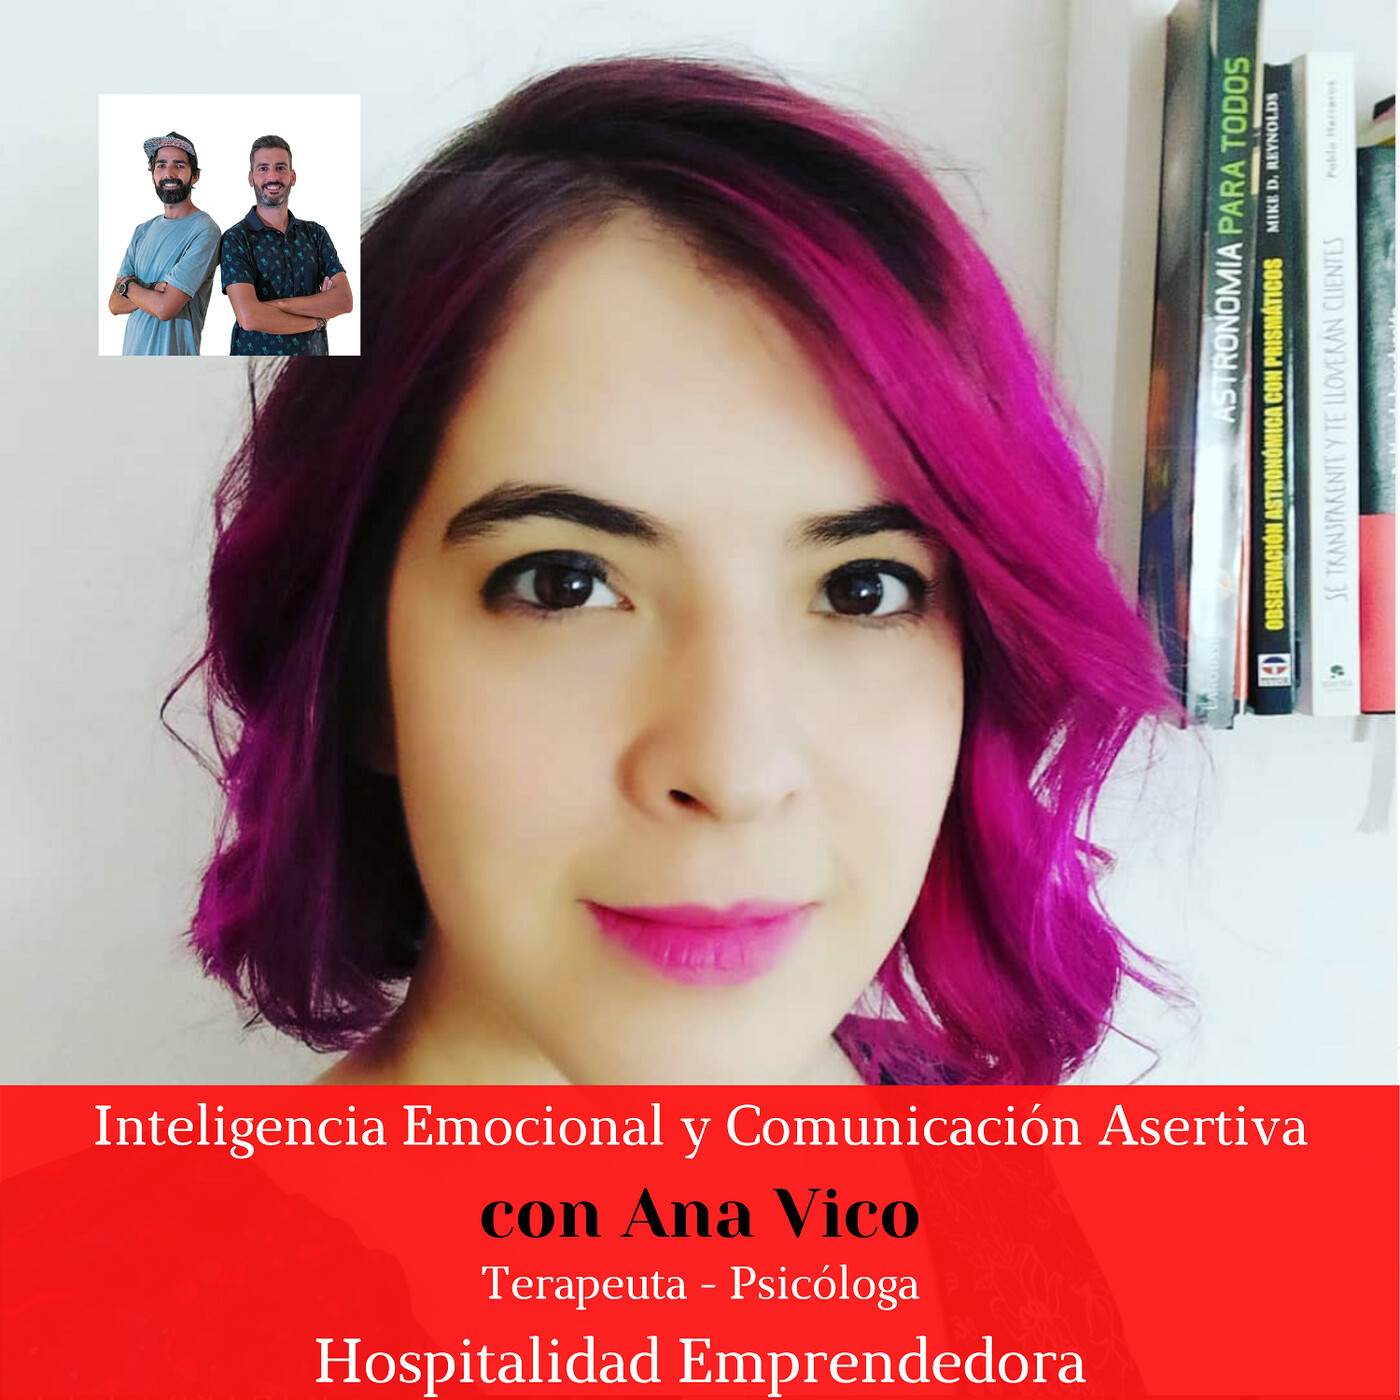 Inteligencia emocional y comunicación asertiva con Ana Vico. Temp 3 Episodio 9